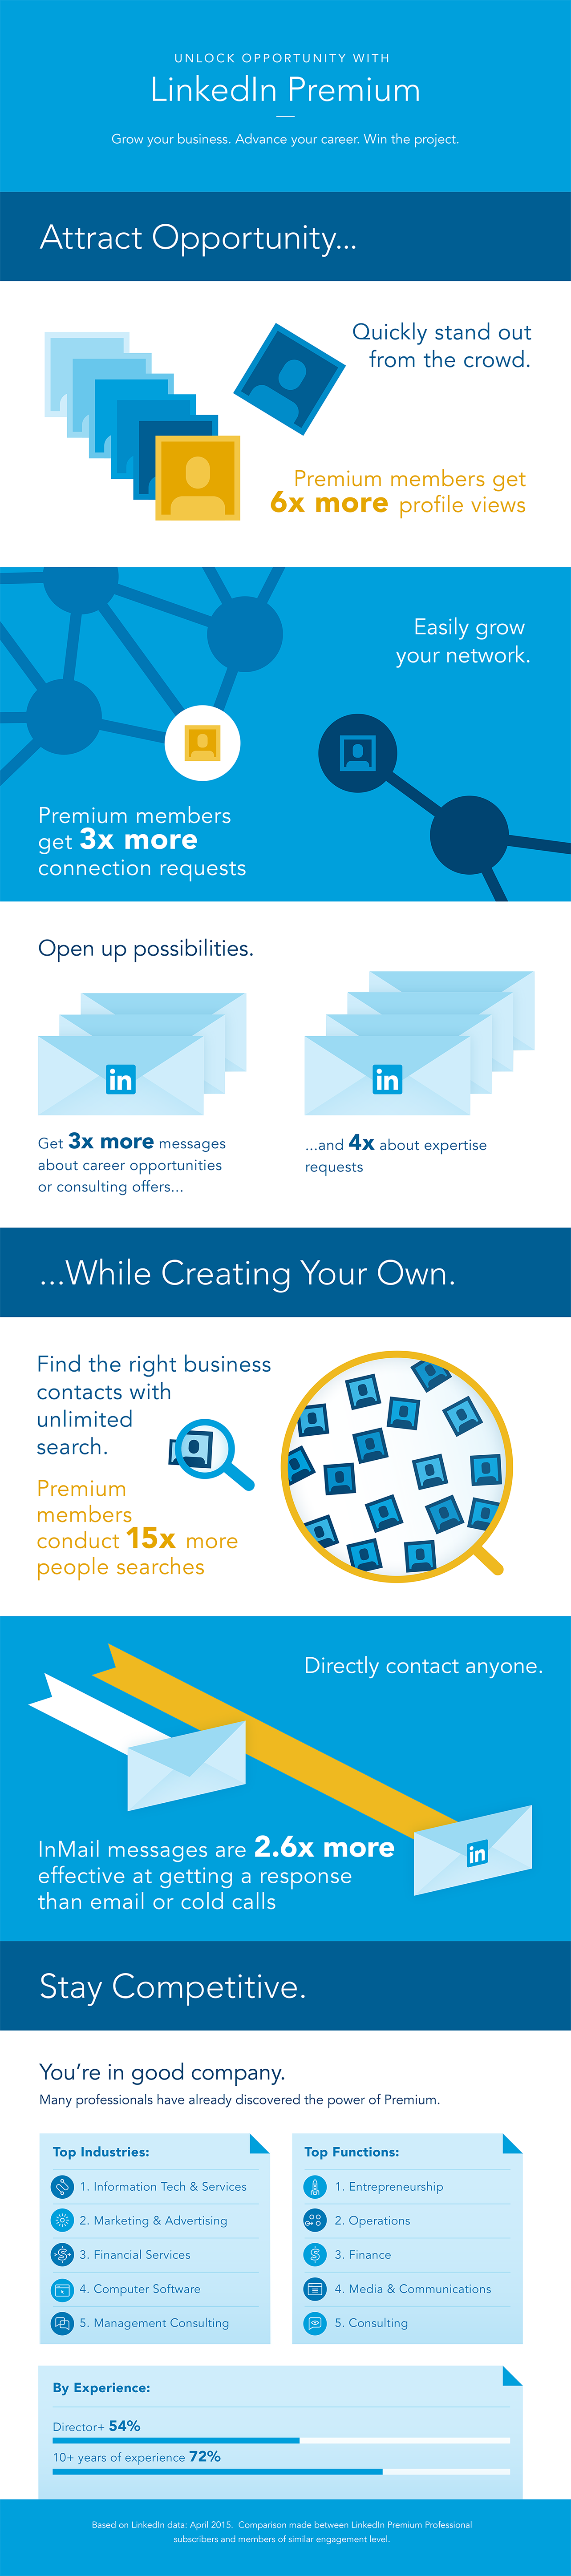 Linkedin Premium Professional Infographic